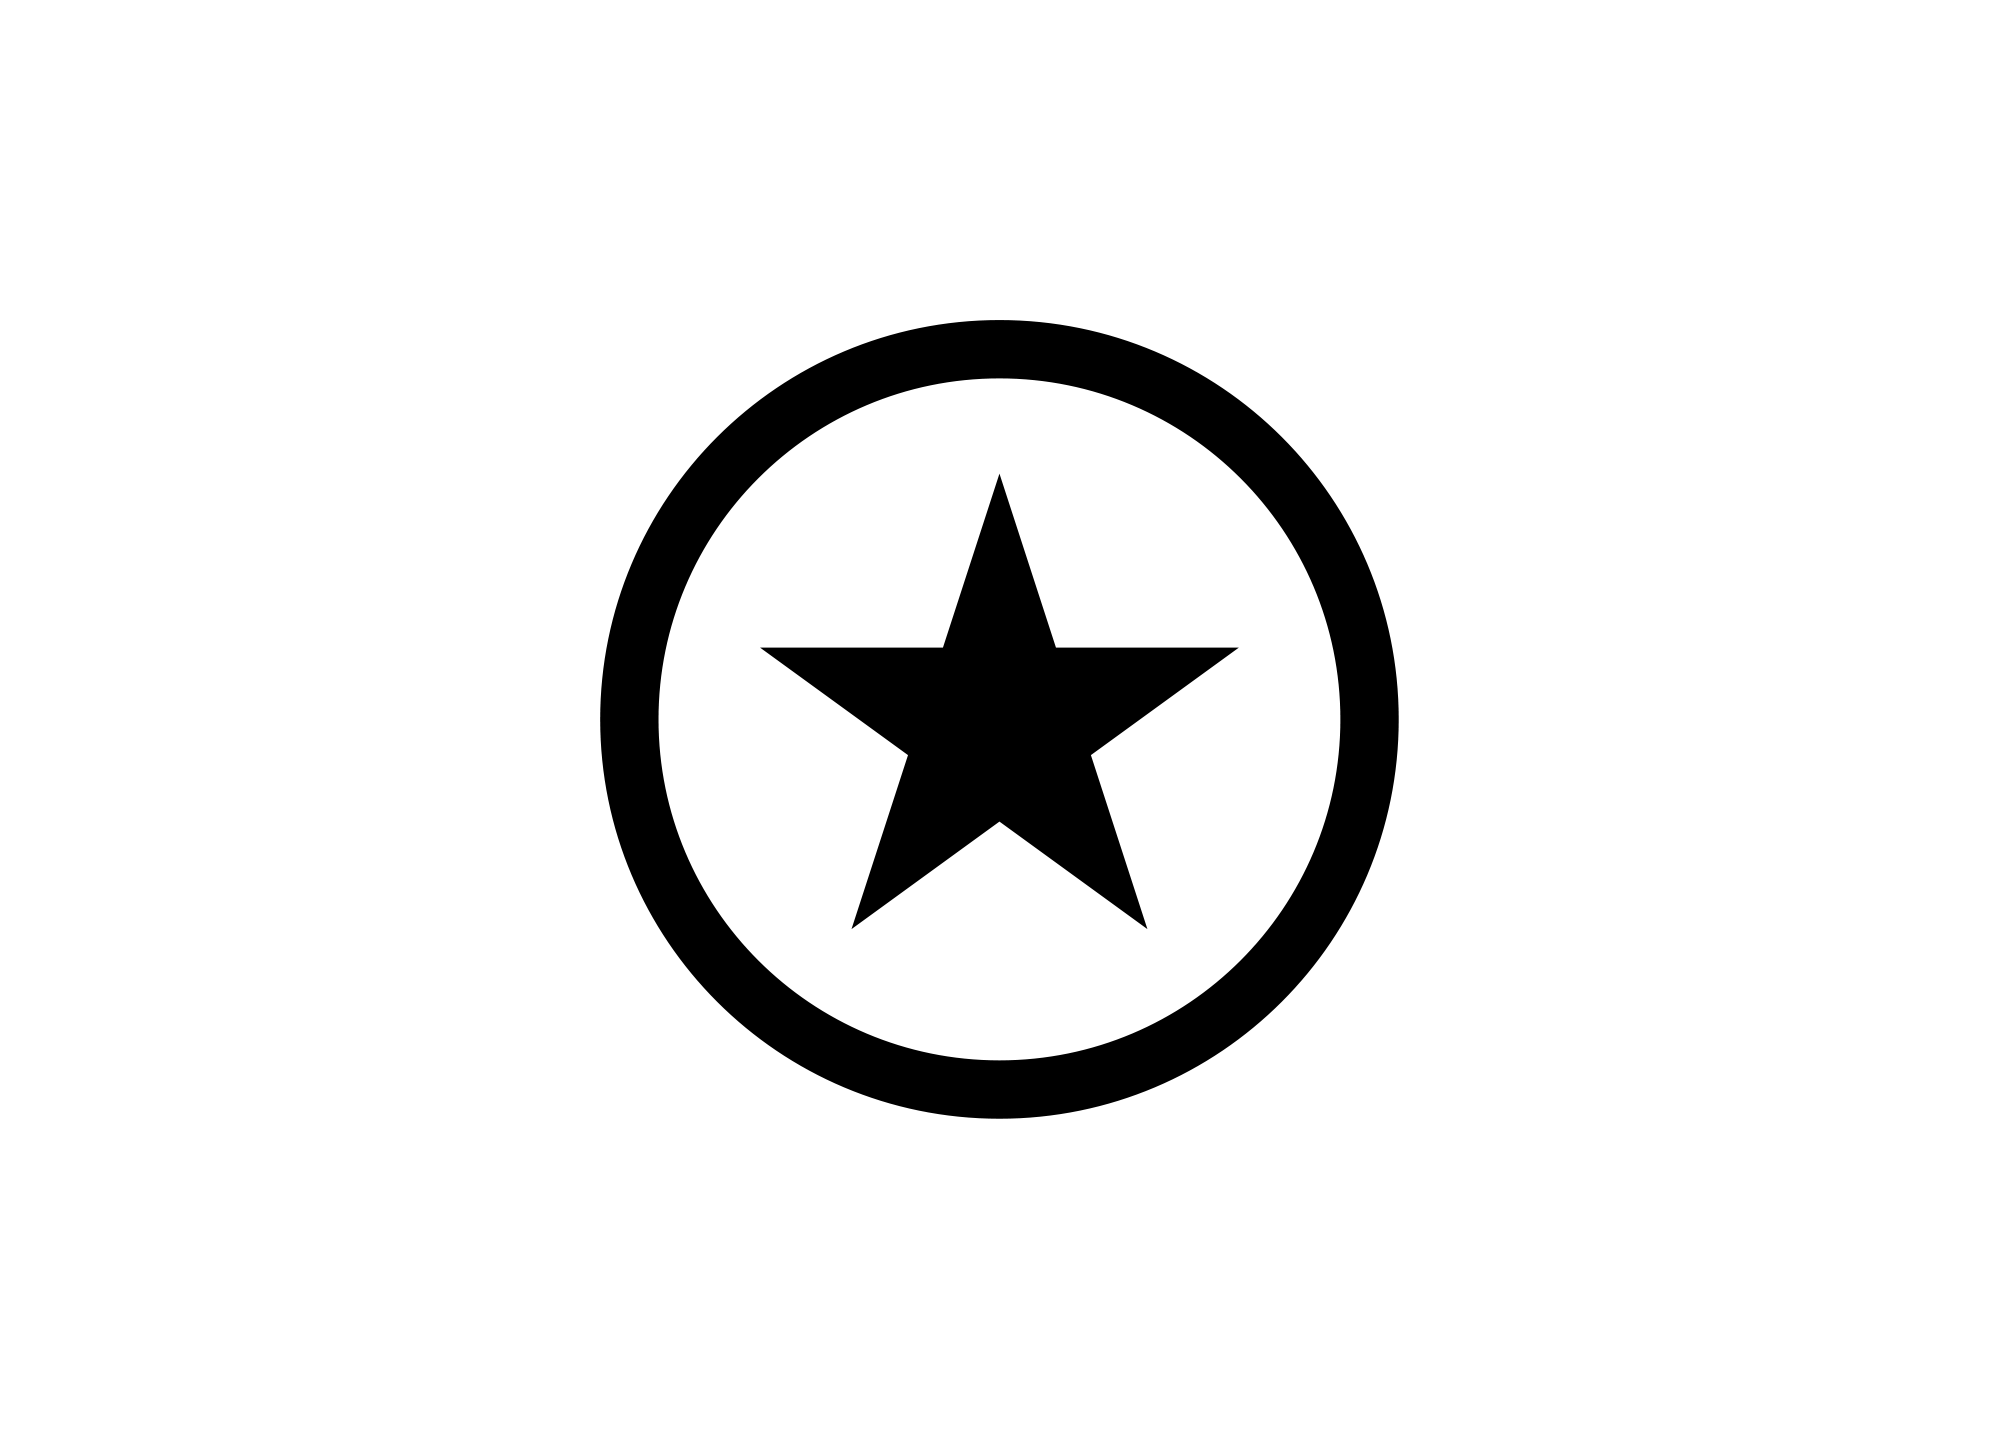 Star Black and White Logo - Black star Logos